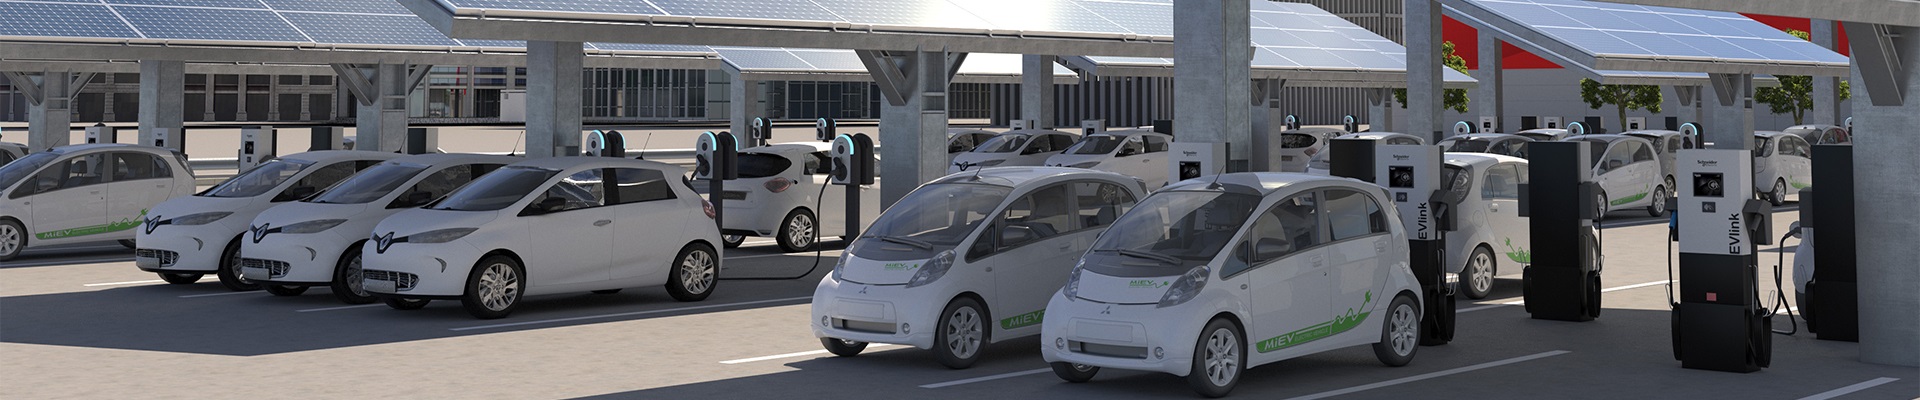 Smart EV Charging in Buildings: A key lever for accelerating EVs’ adoption